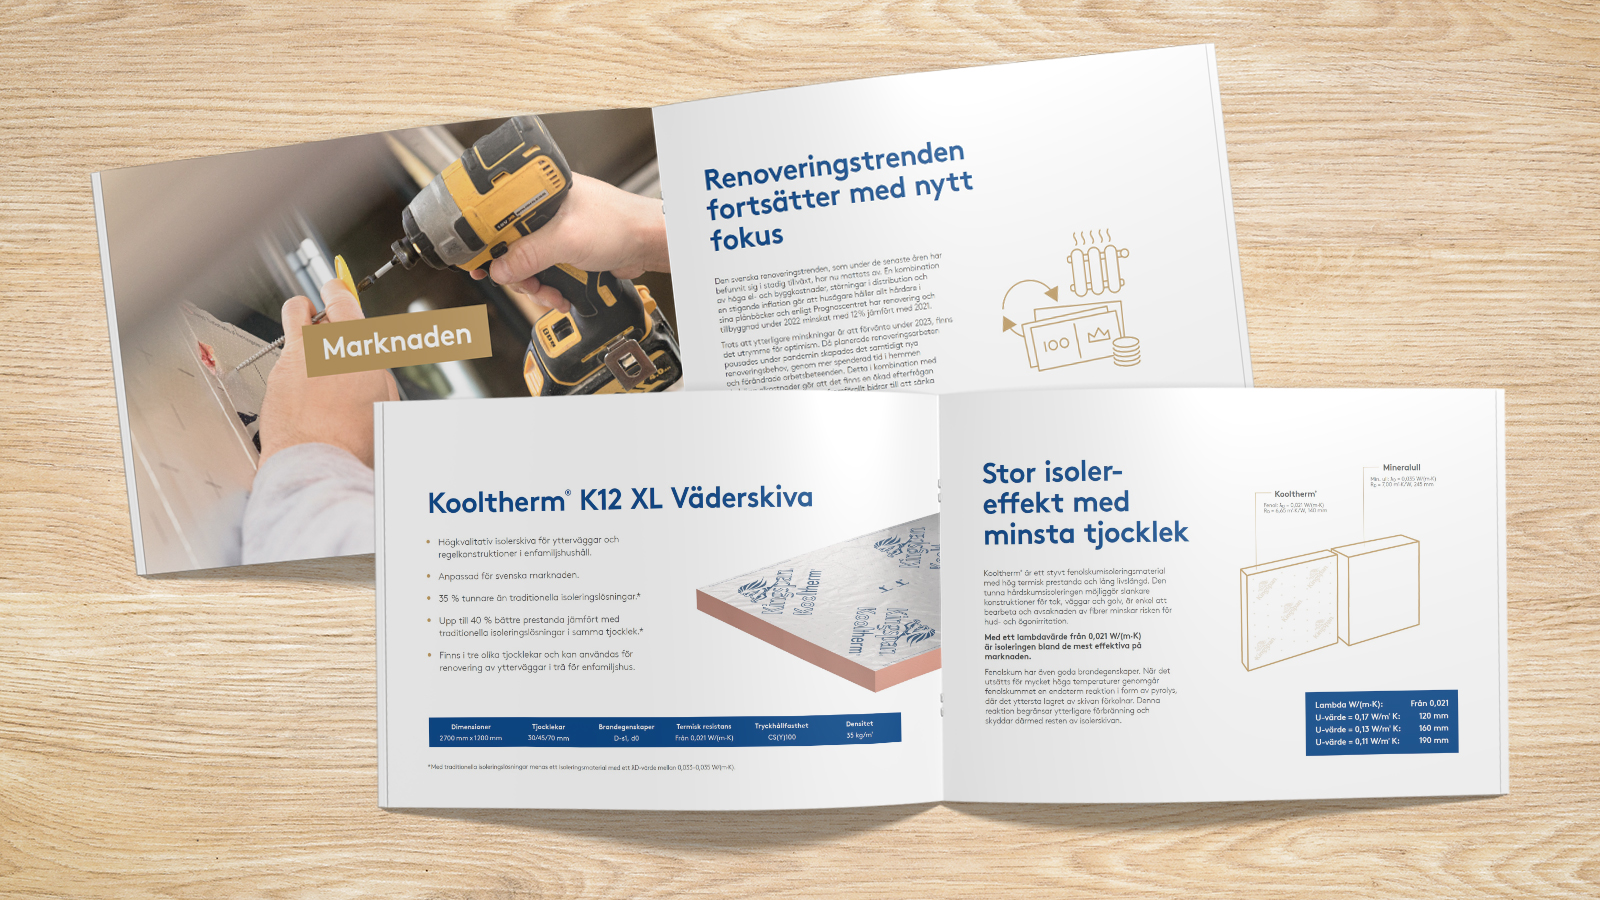 Sales guide for K12 XL Väderskiva.